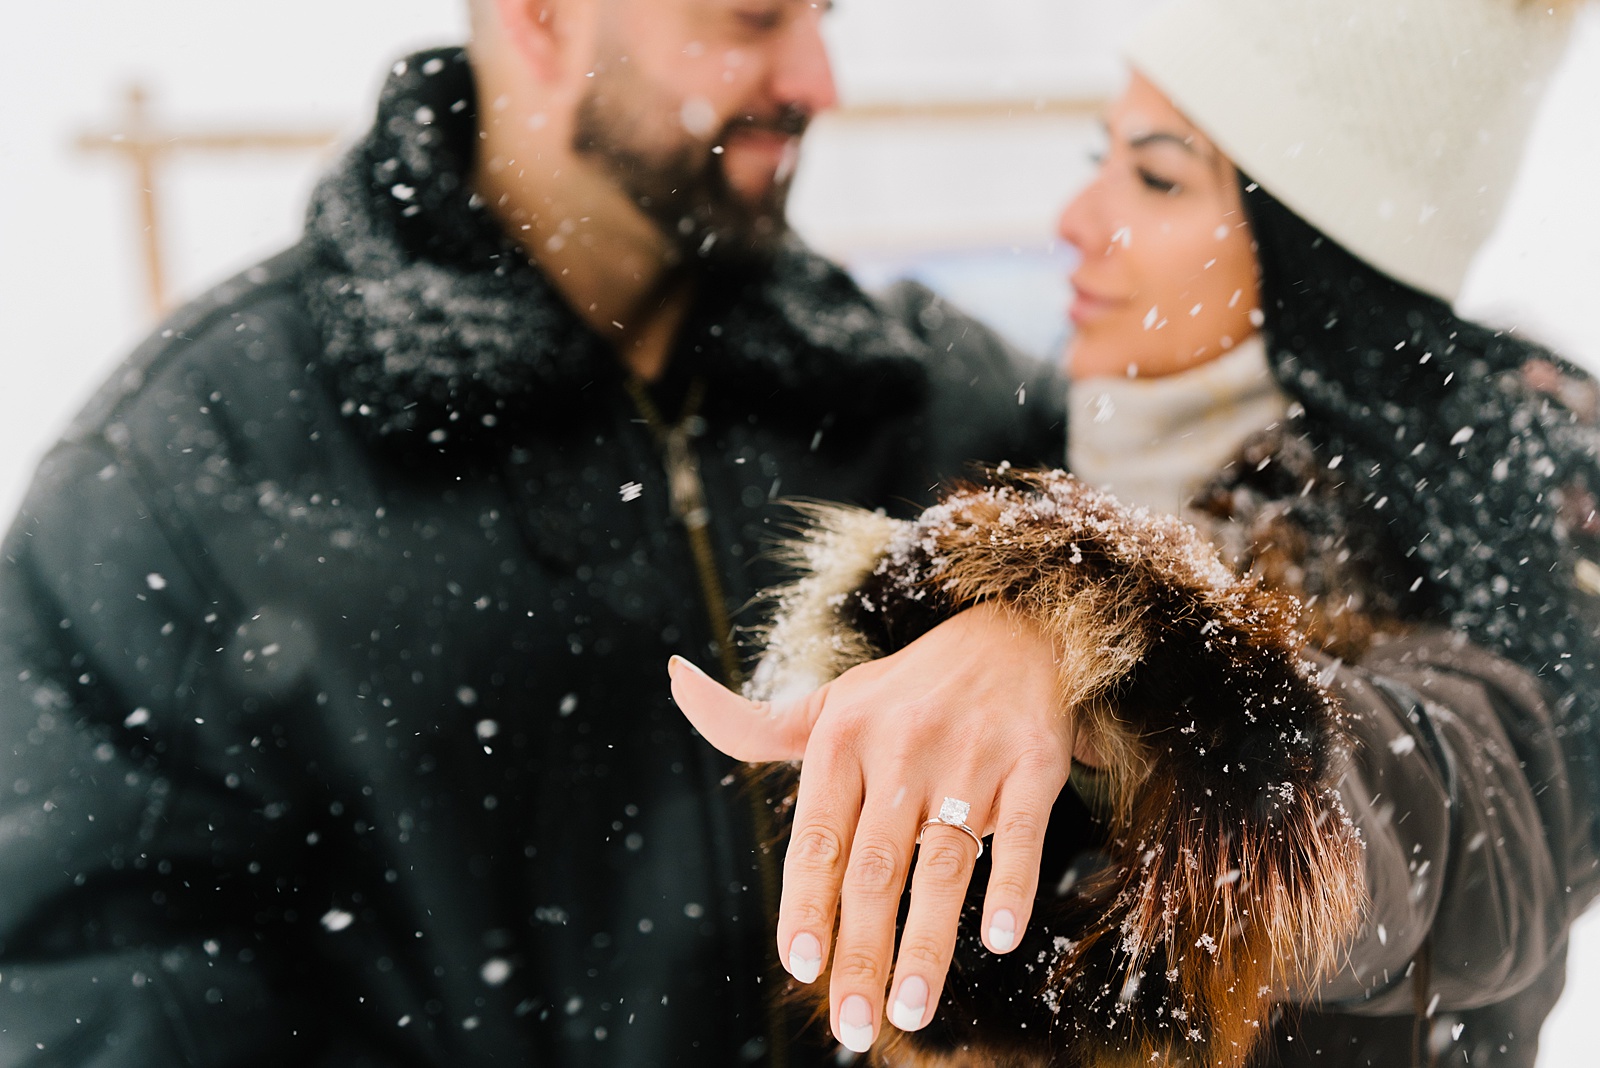 Jackson Hole photographers capture couple celebrating recent surprise proposal